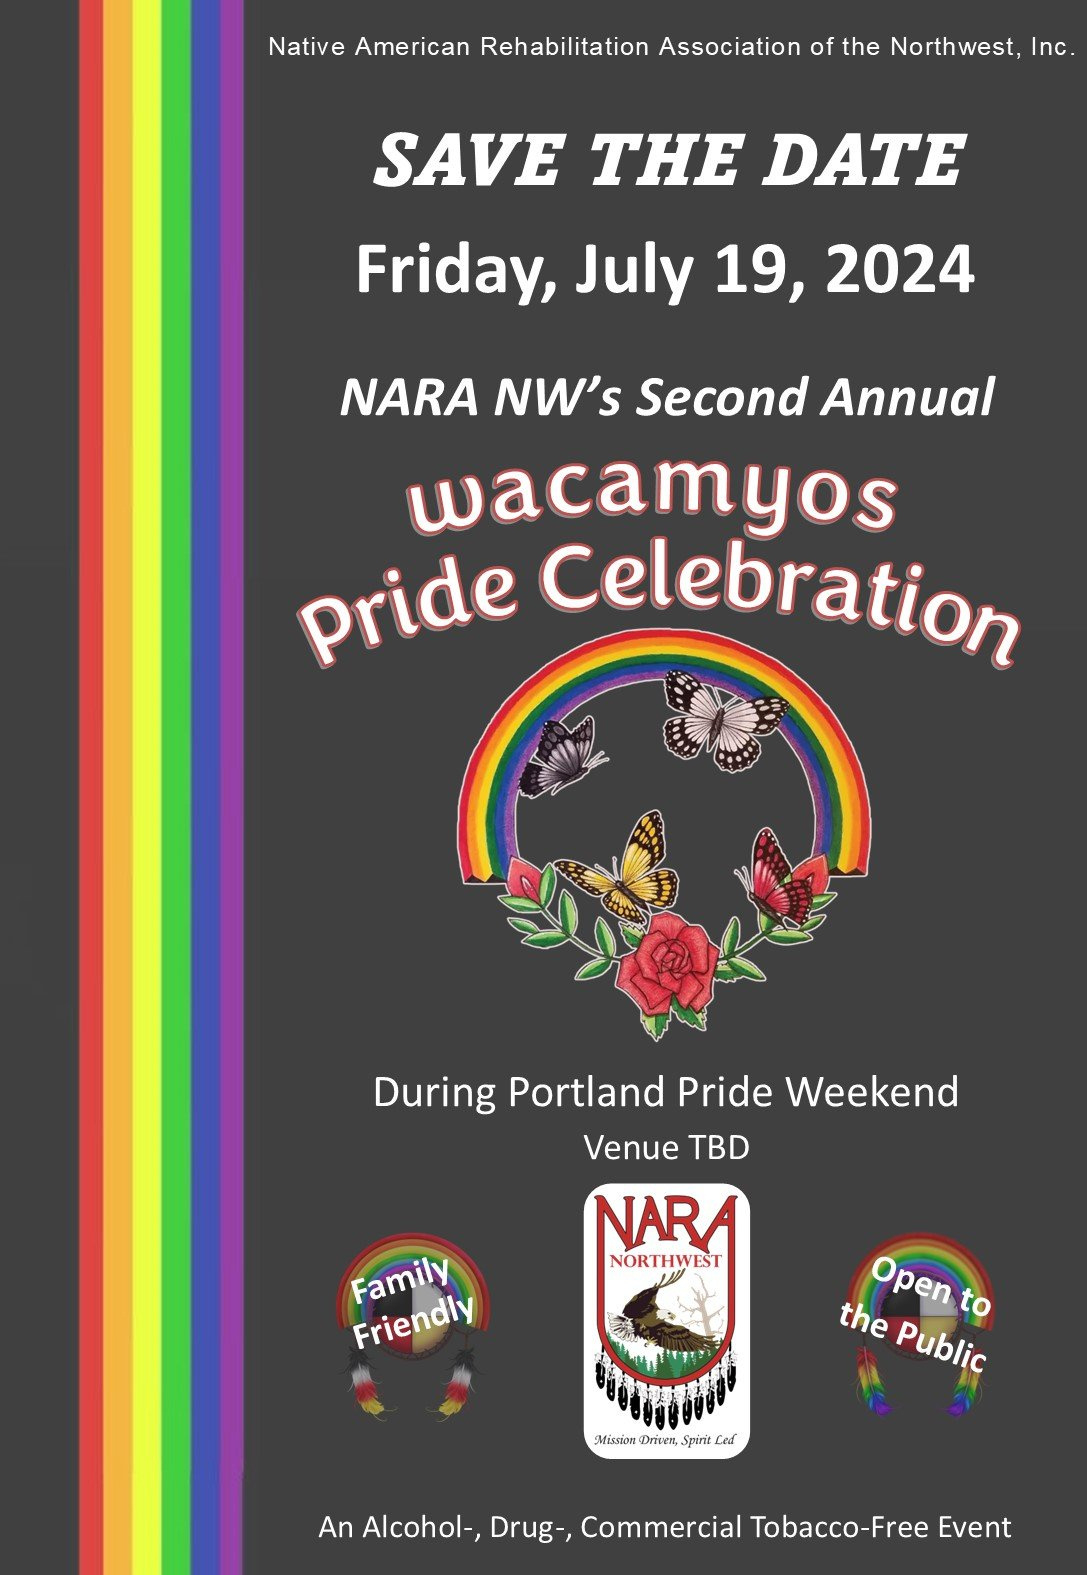 2024 Portland Pride Official Events | Portland Pride | Portland, Or in Portland Calendar of Events July 2024